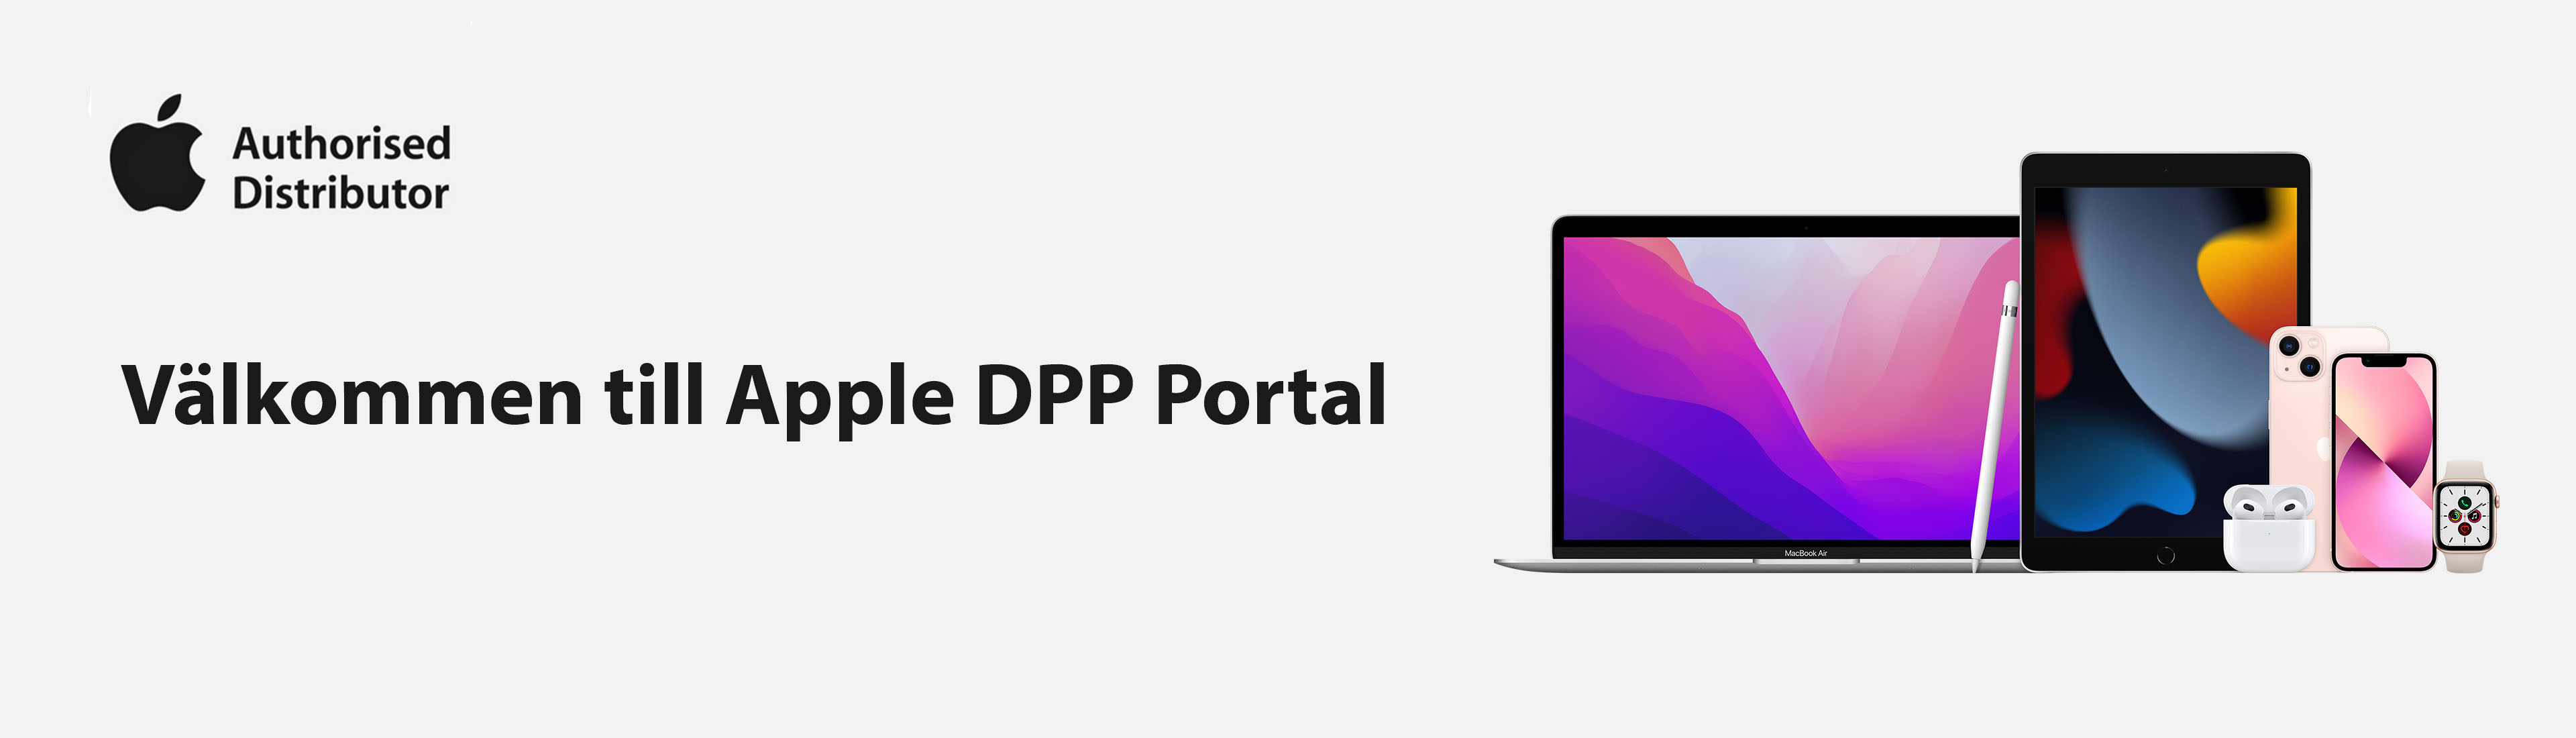 Apple DPP Portal